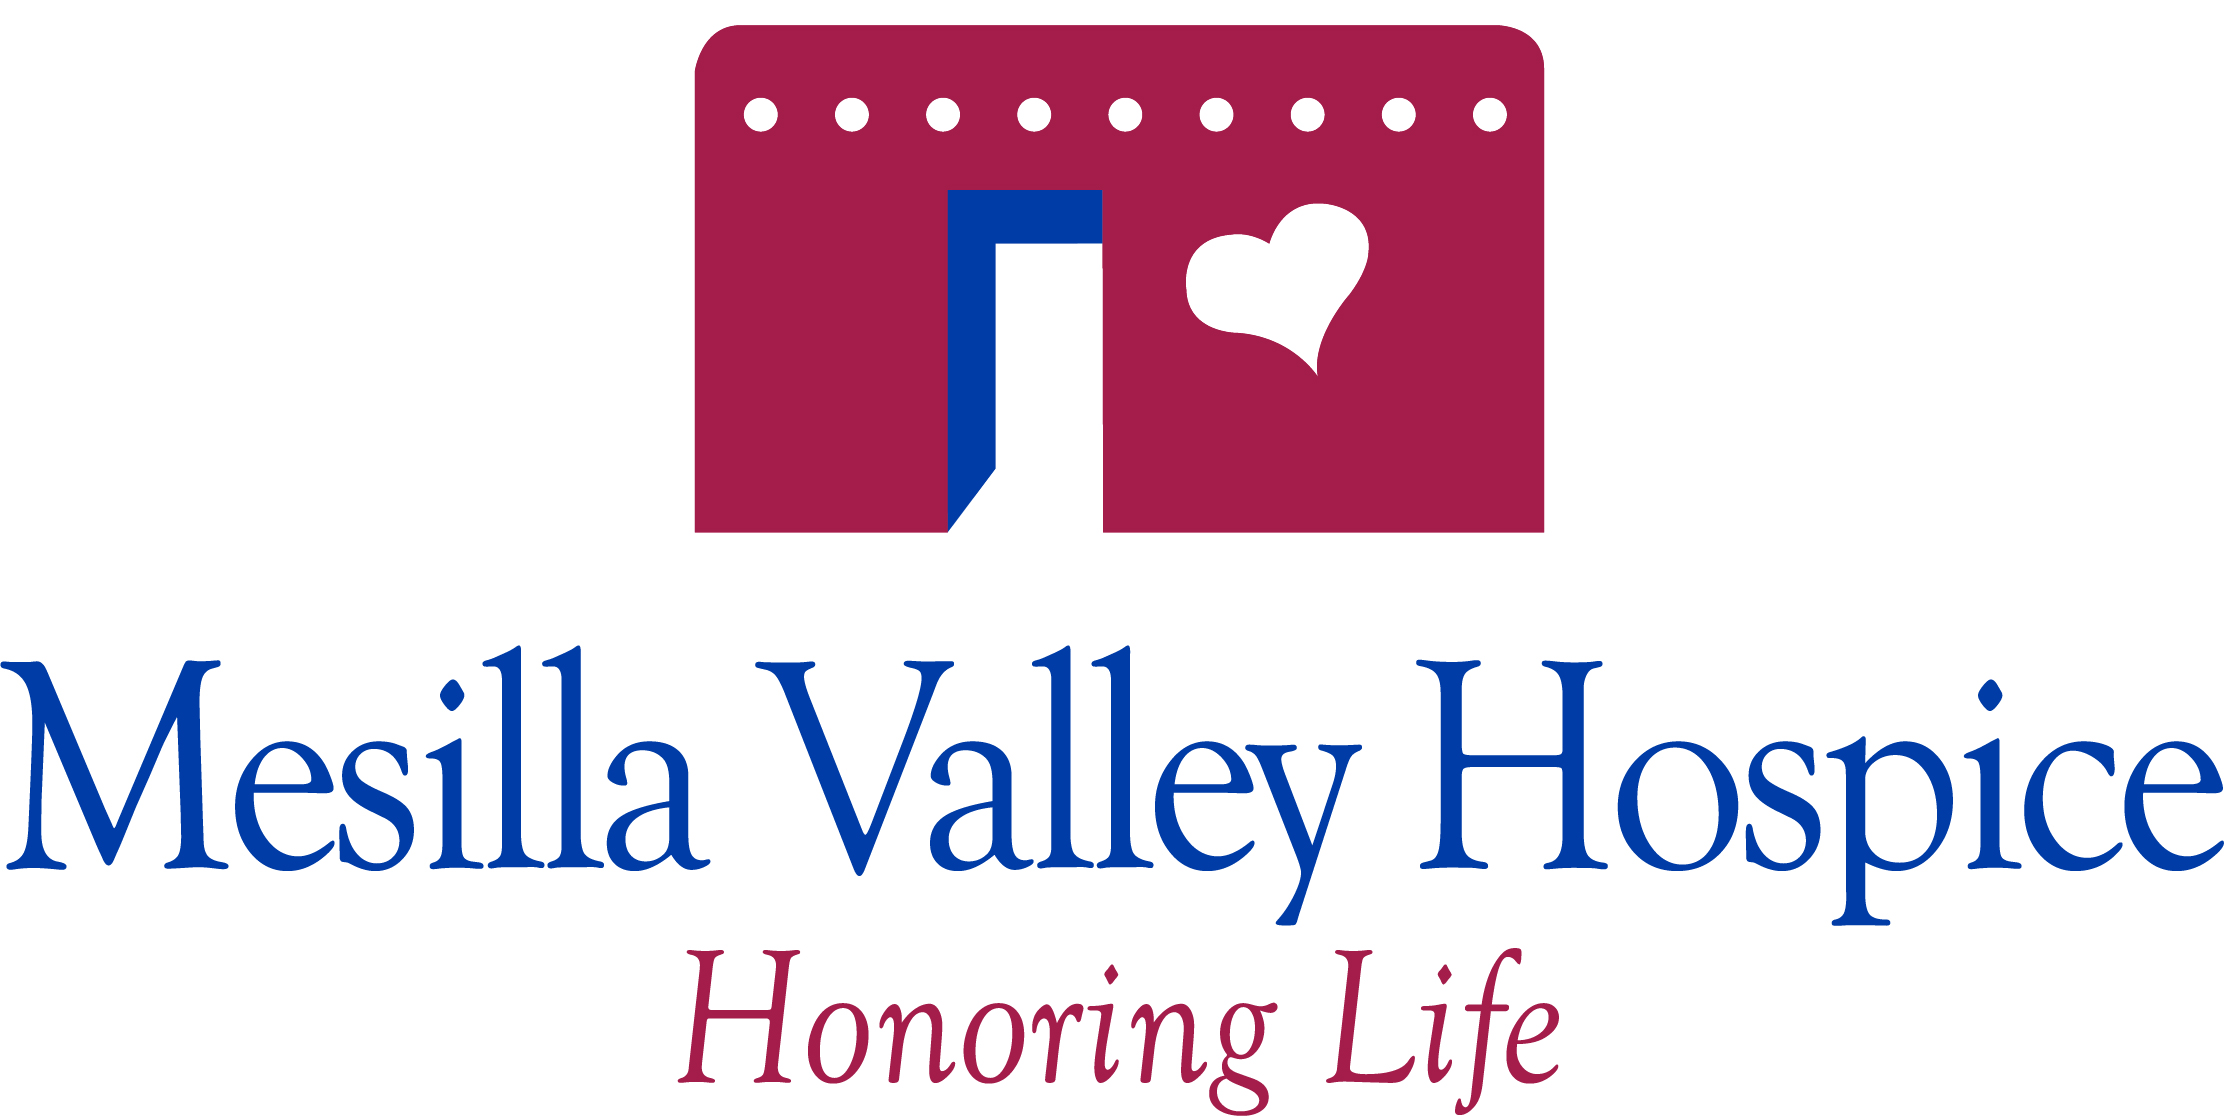 B Mesa Valley Hospice (Promise Garden Level)